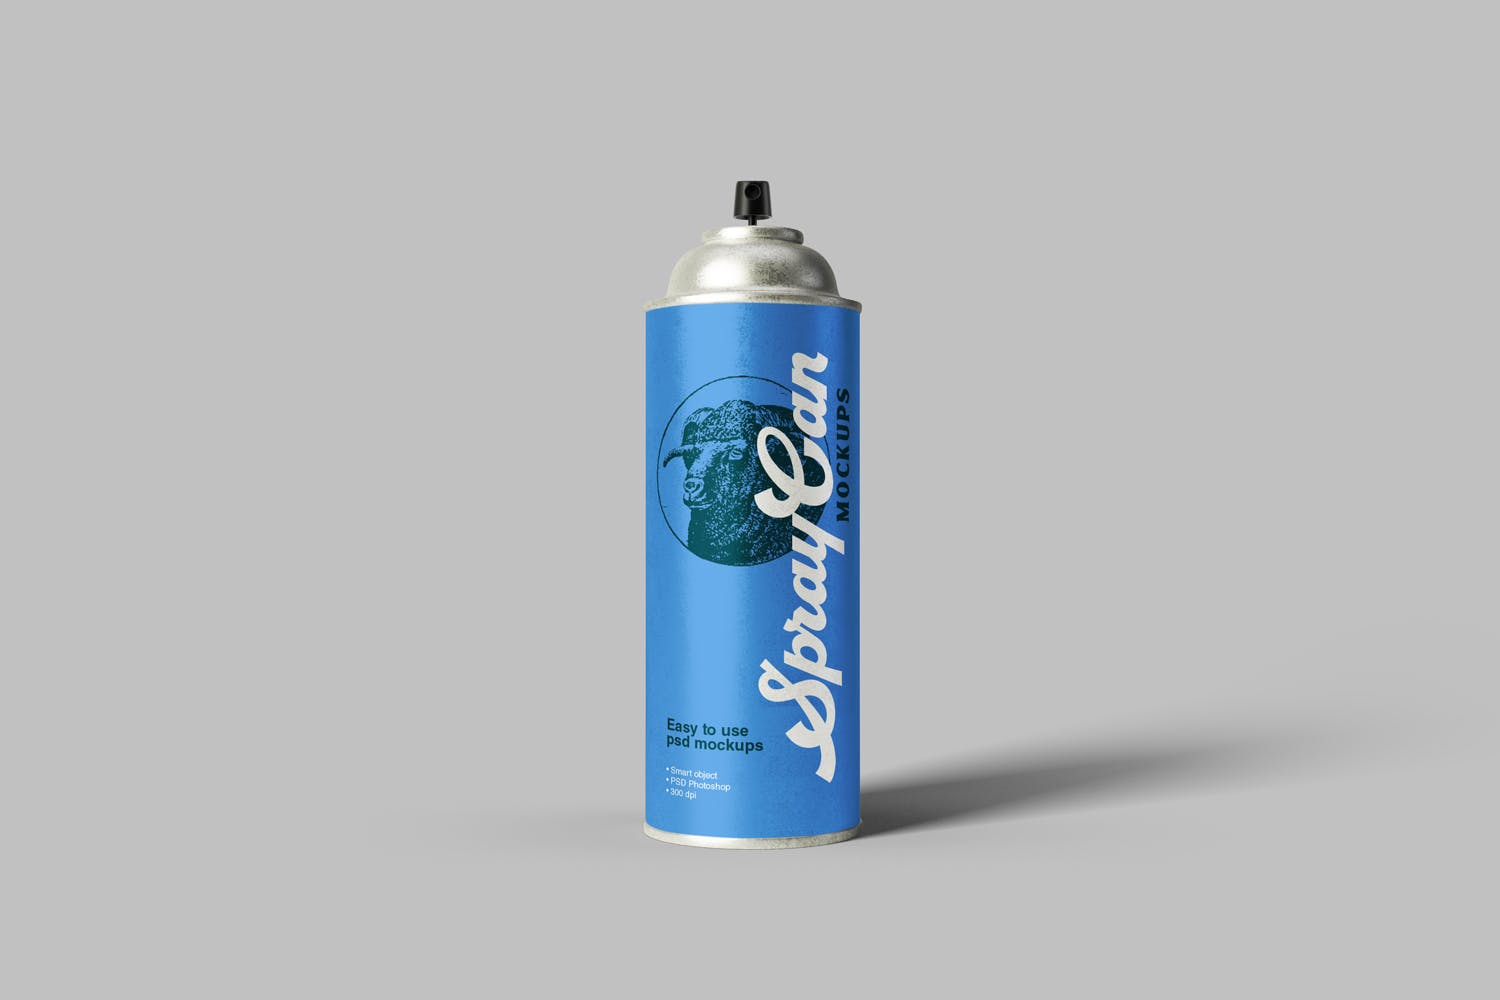 液压喷雾罐外观设计样机模板 Spray Can Mockups插图(3)